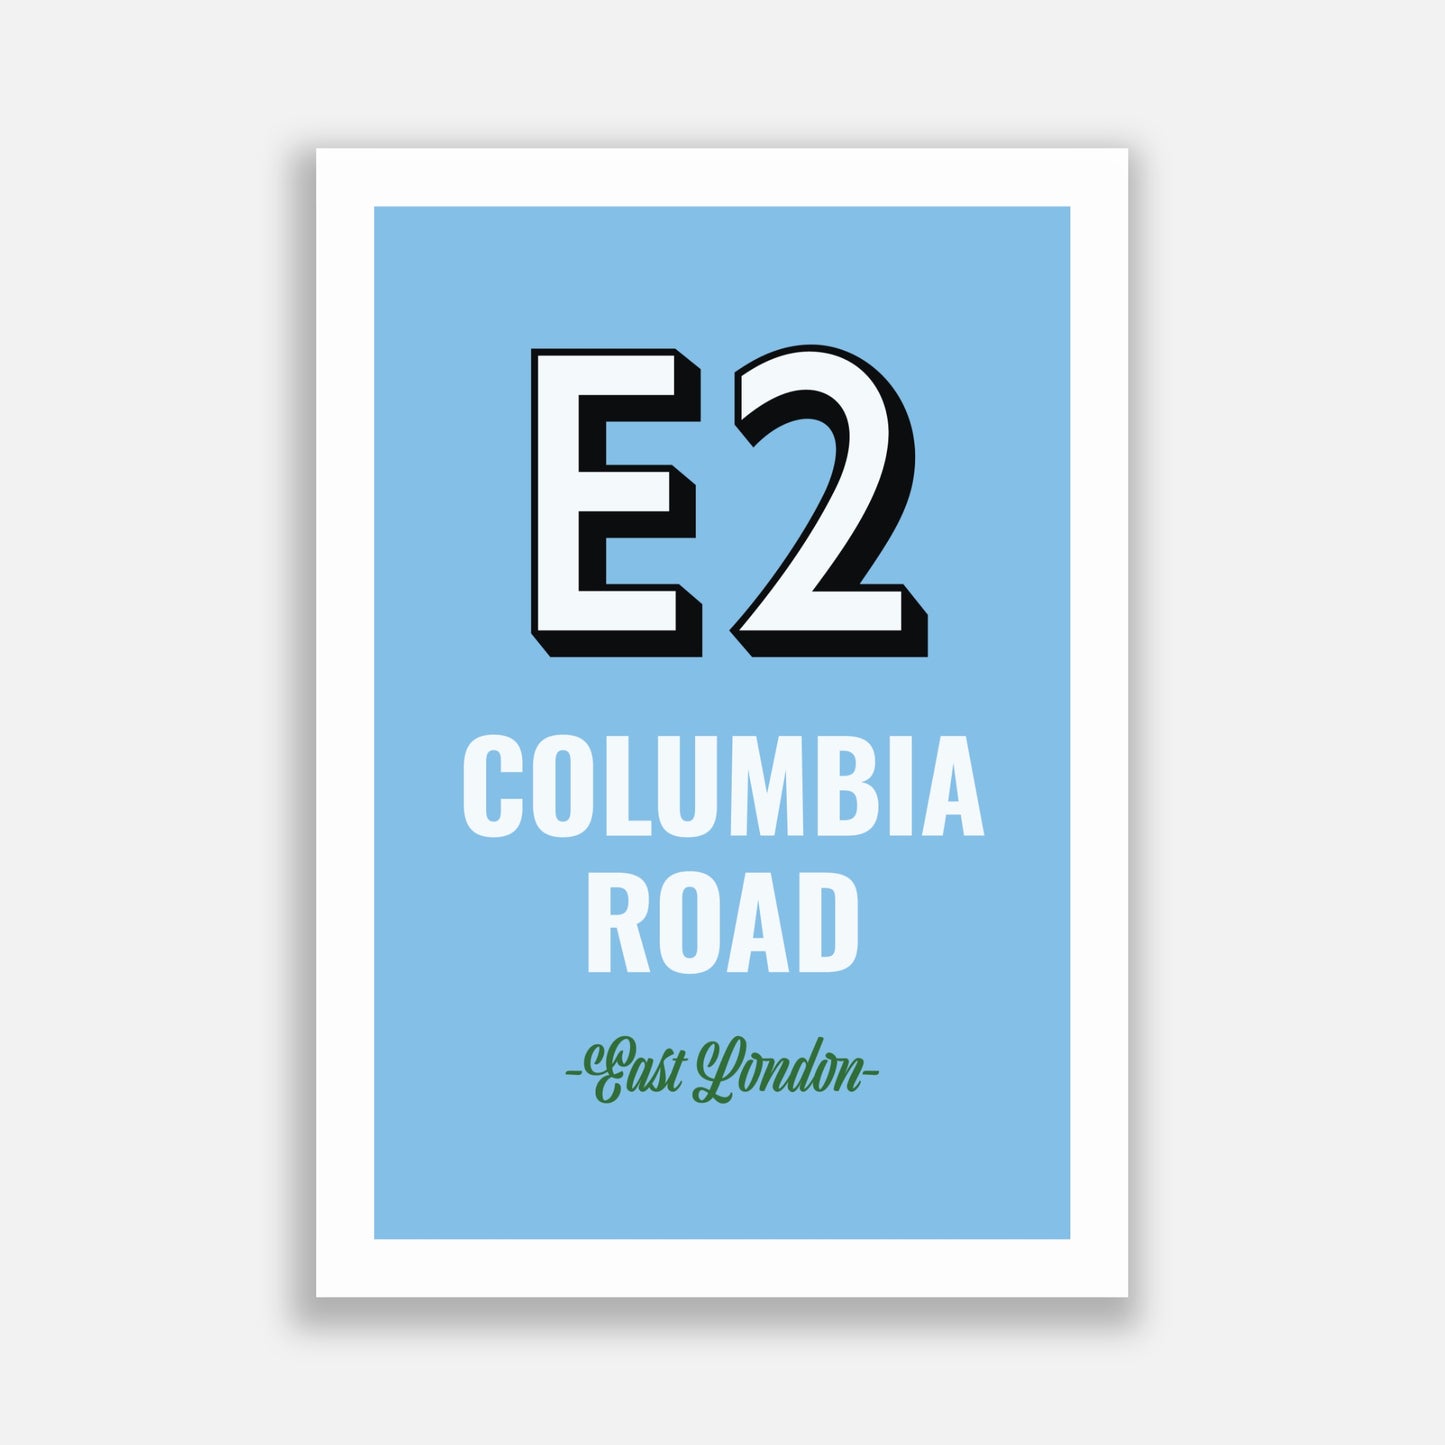 Columbia Road E2 Postcode Poster